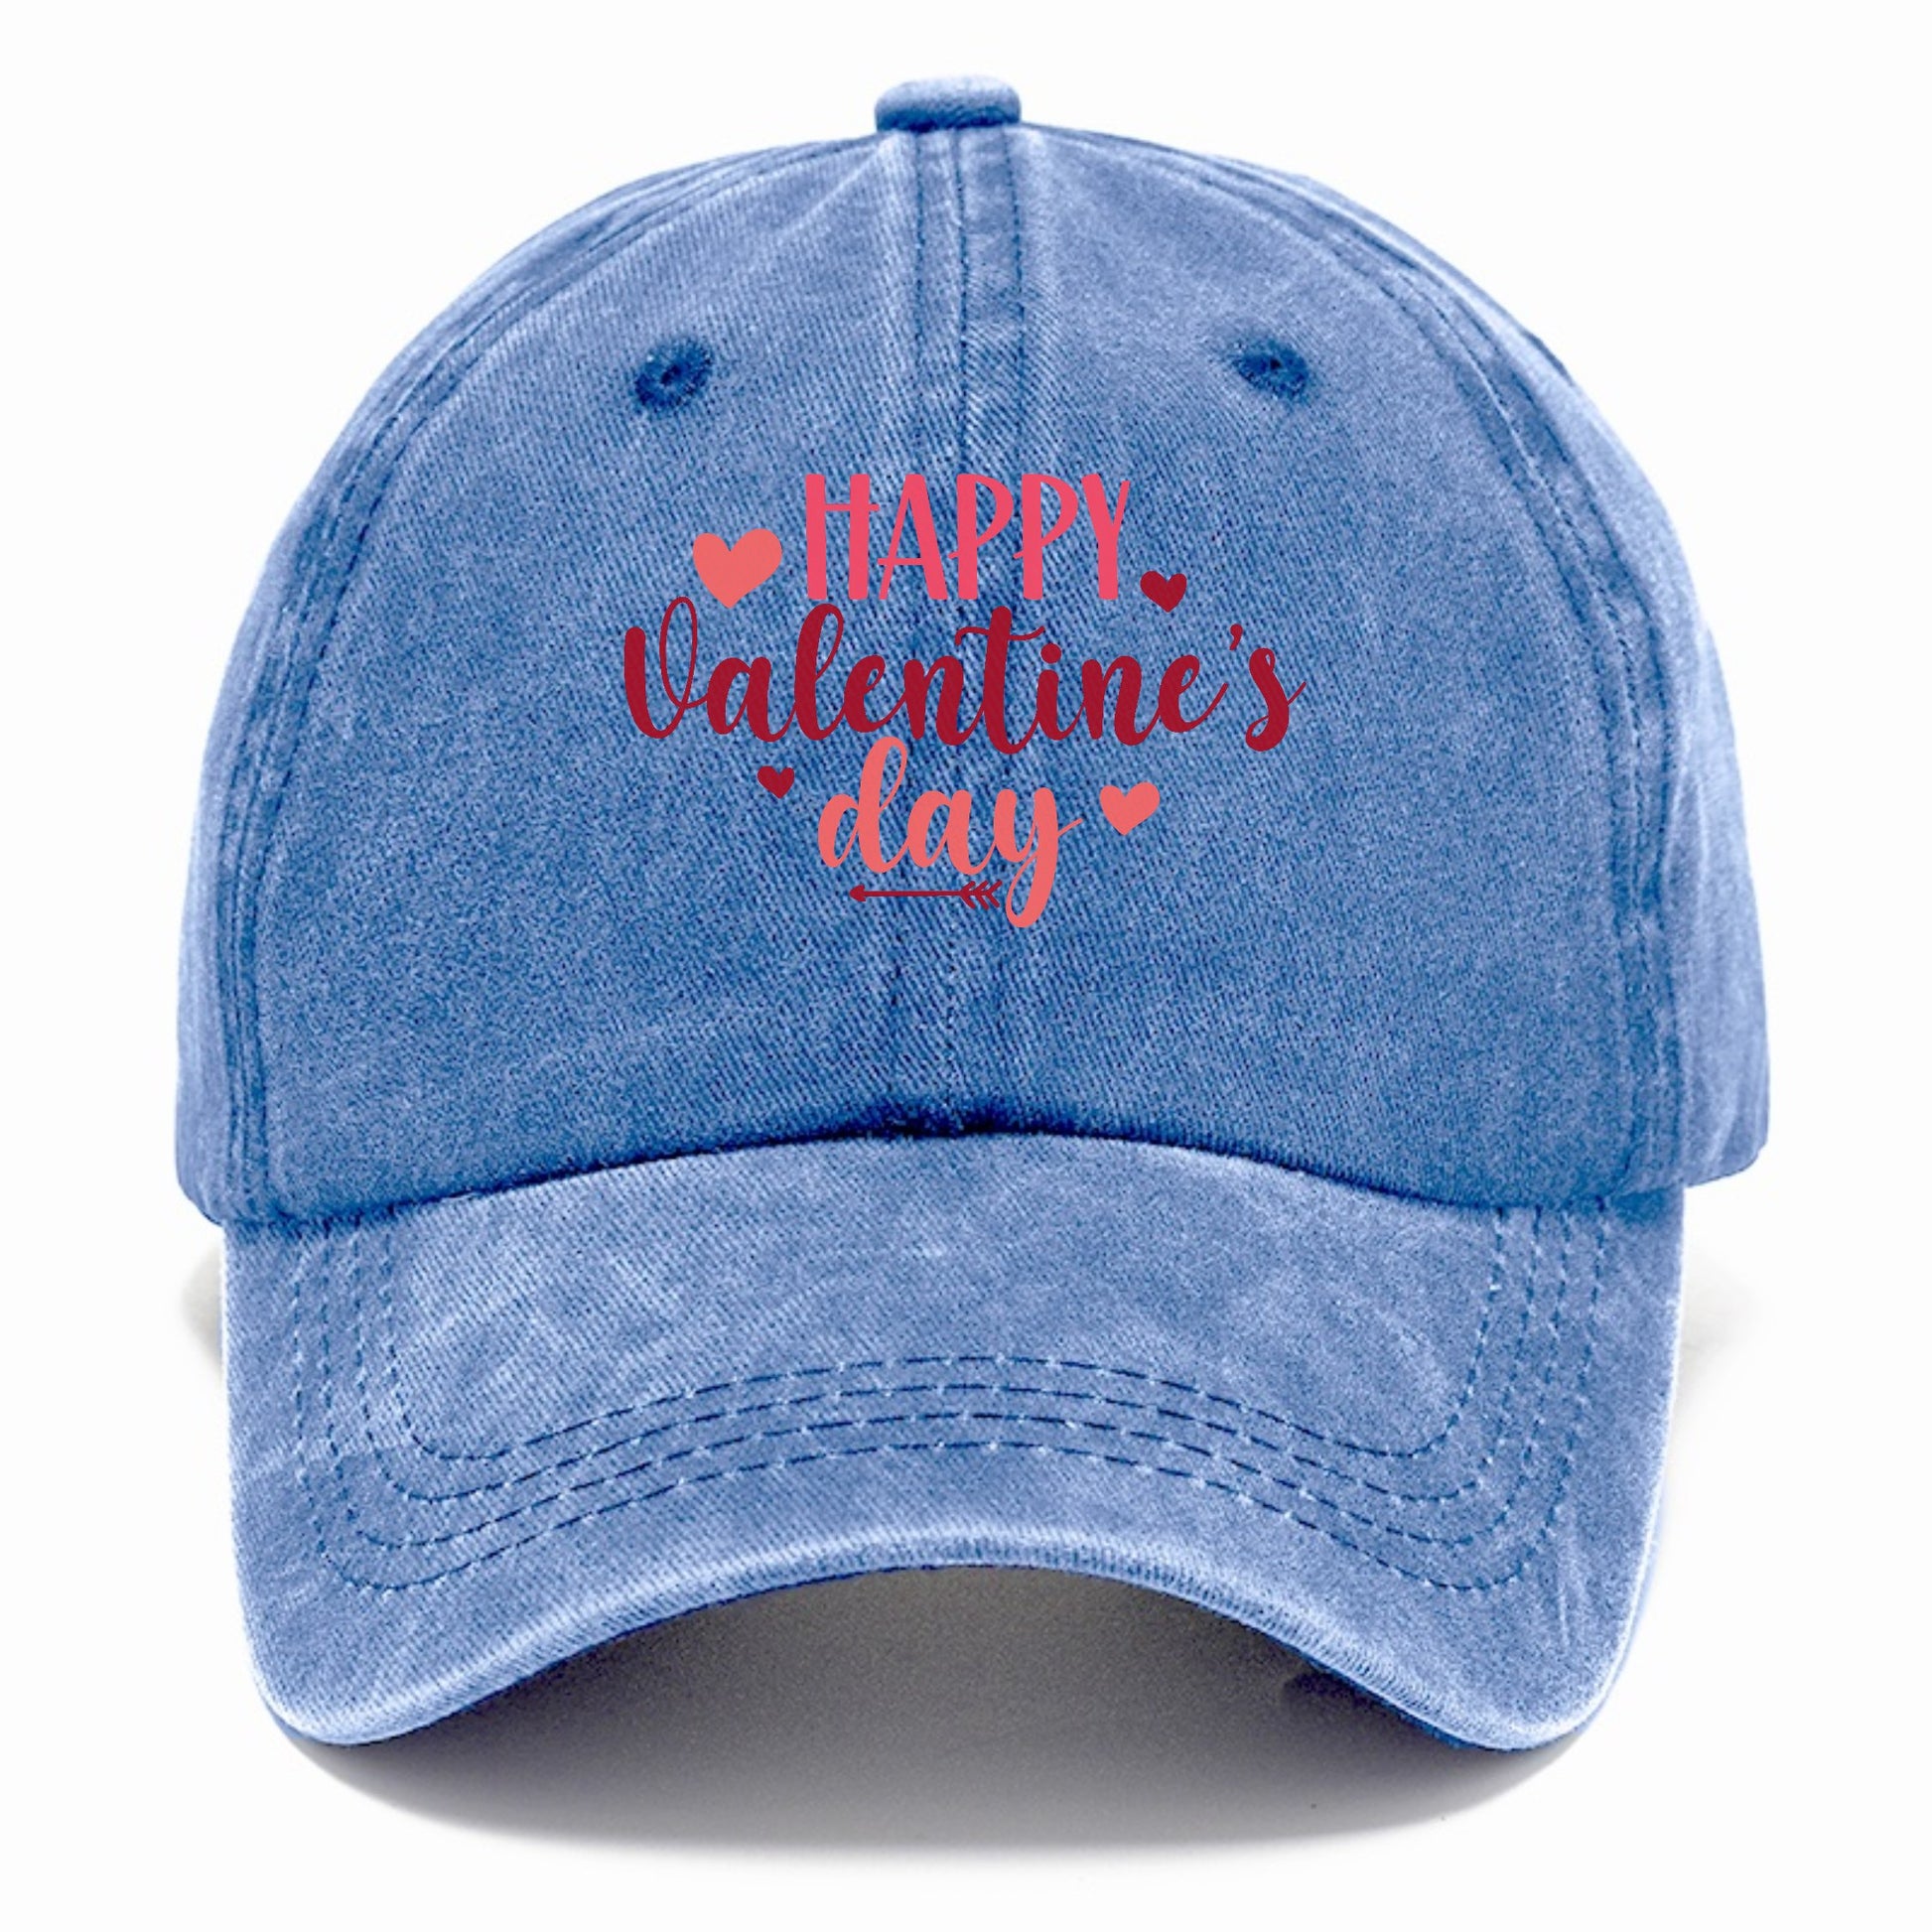 happy valentines's day Hat